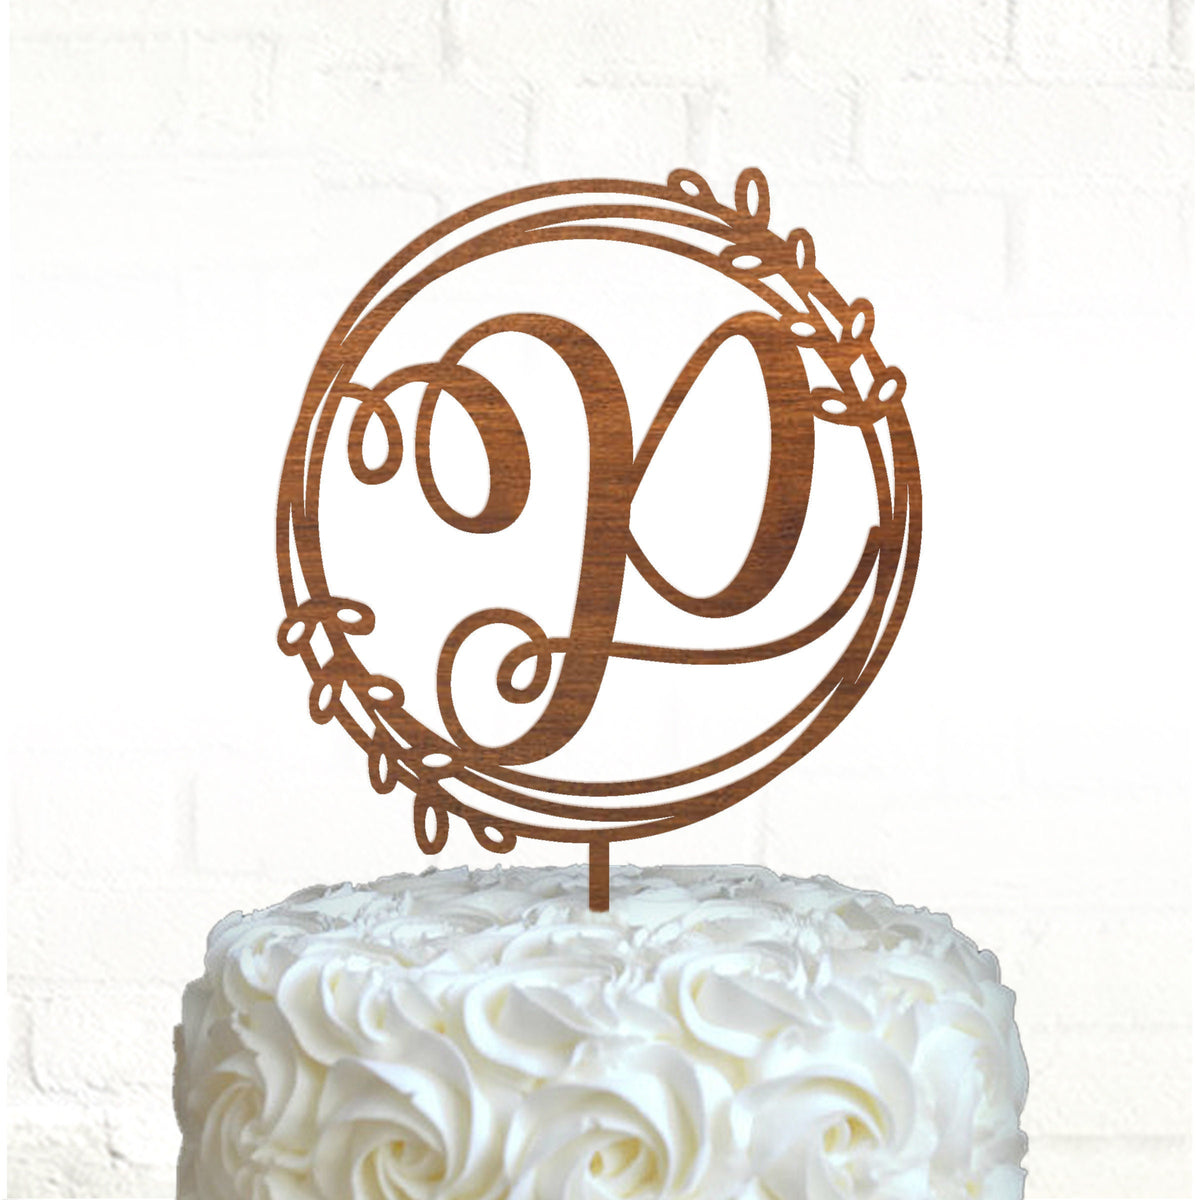 Wedding monogram cake topper, Wood cake topper / Laser cut, Multi circle wreath cake topper, Personalized cake topper, Rustic cake topper